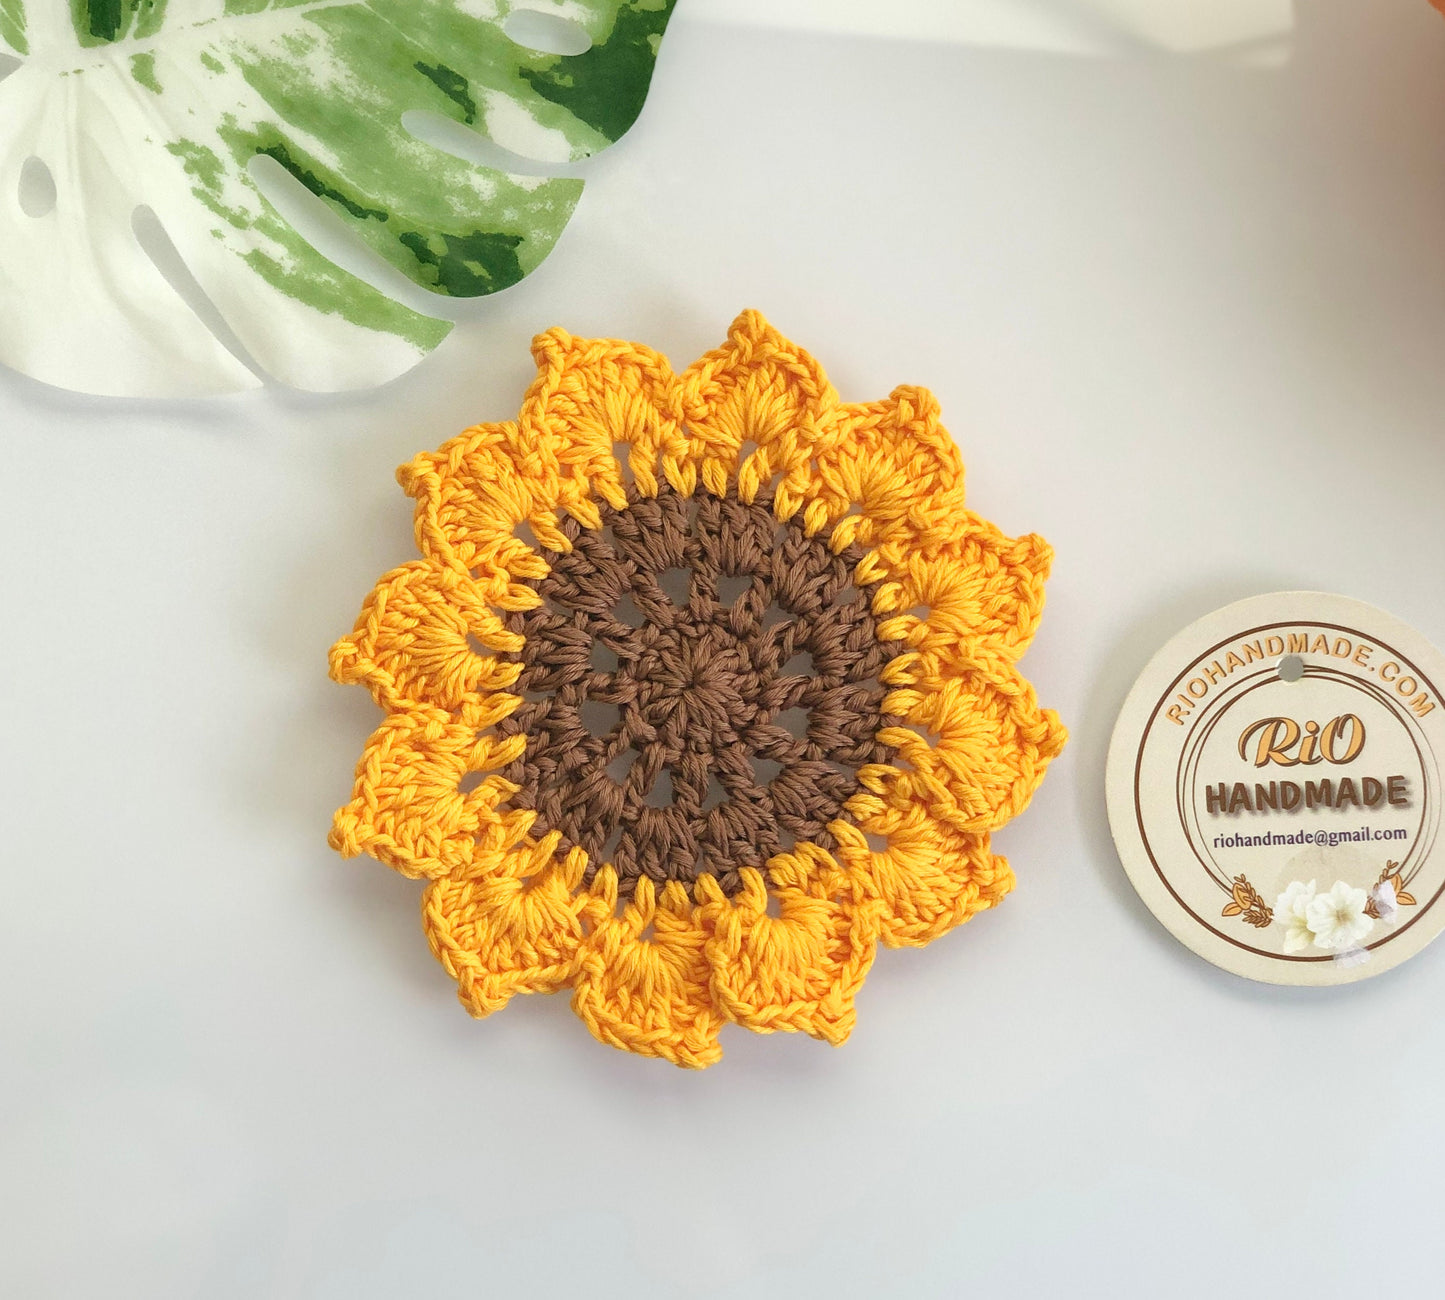 Handmade Crochet Amigurumi Coaster, Sunflower Coaster, Set of 4 Coasters,  Housewarming Gift, Home Decor, Crochet